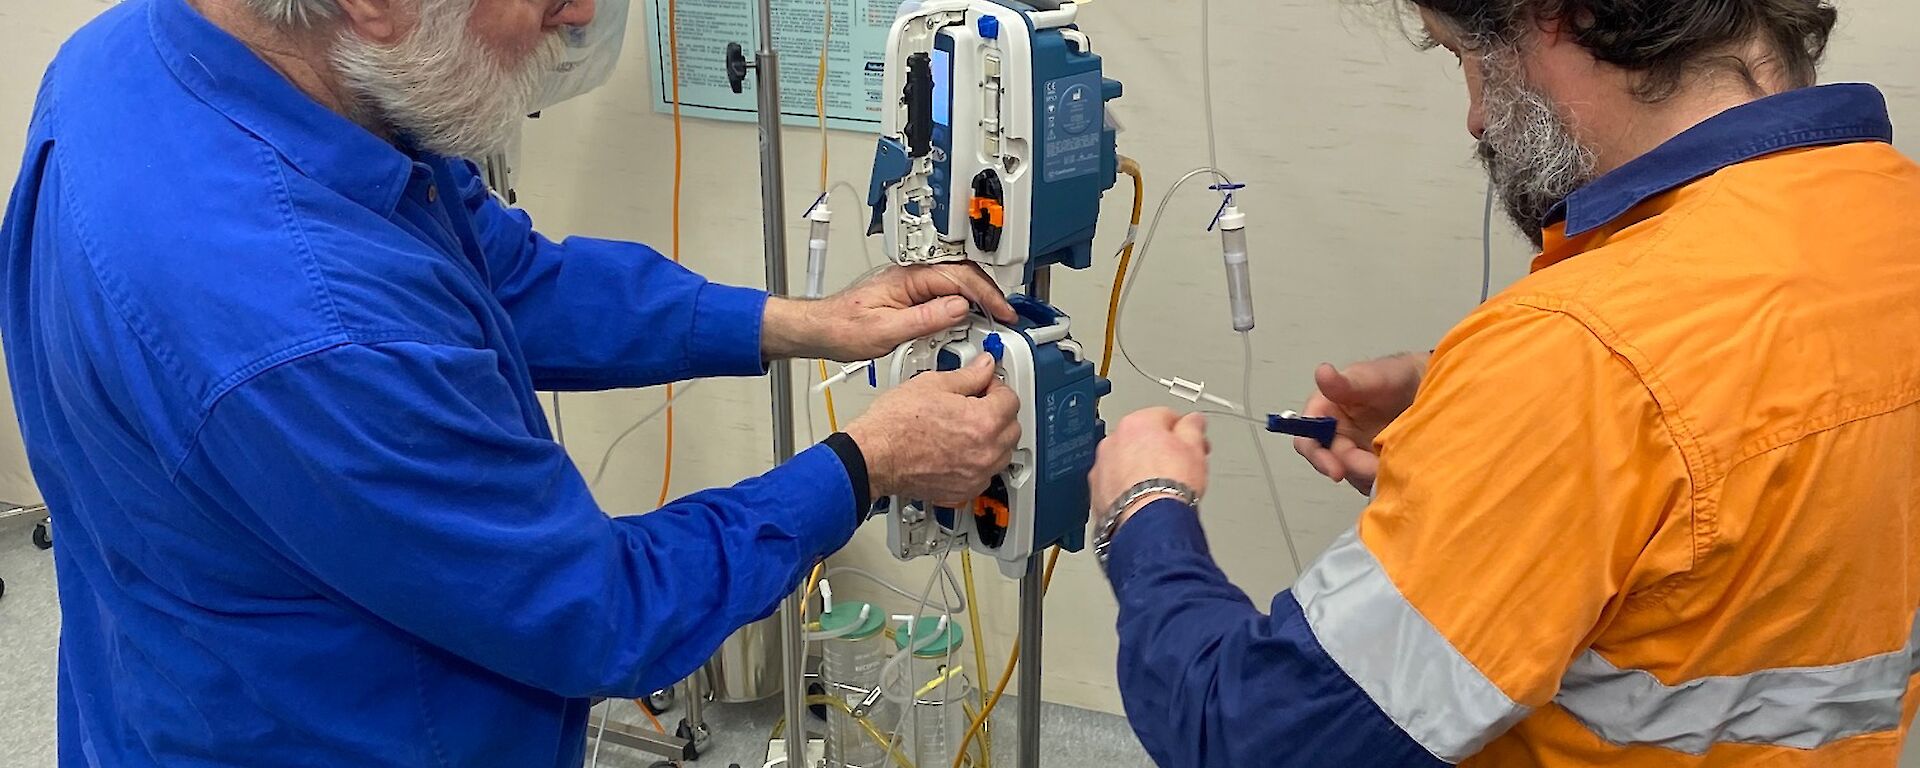 2 men working an IV station